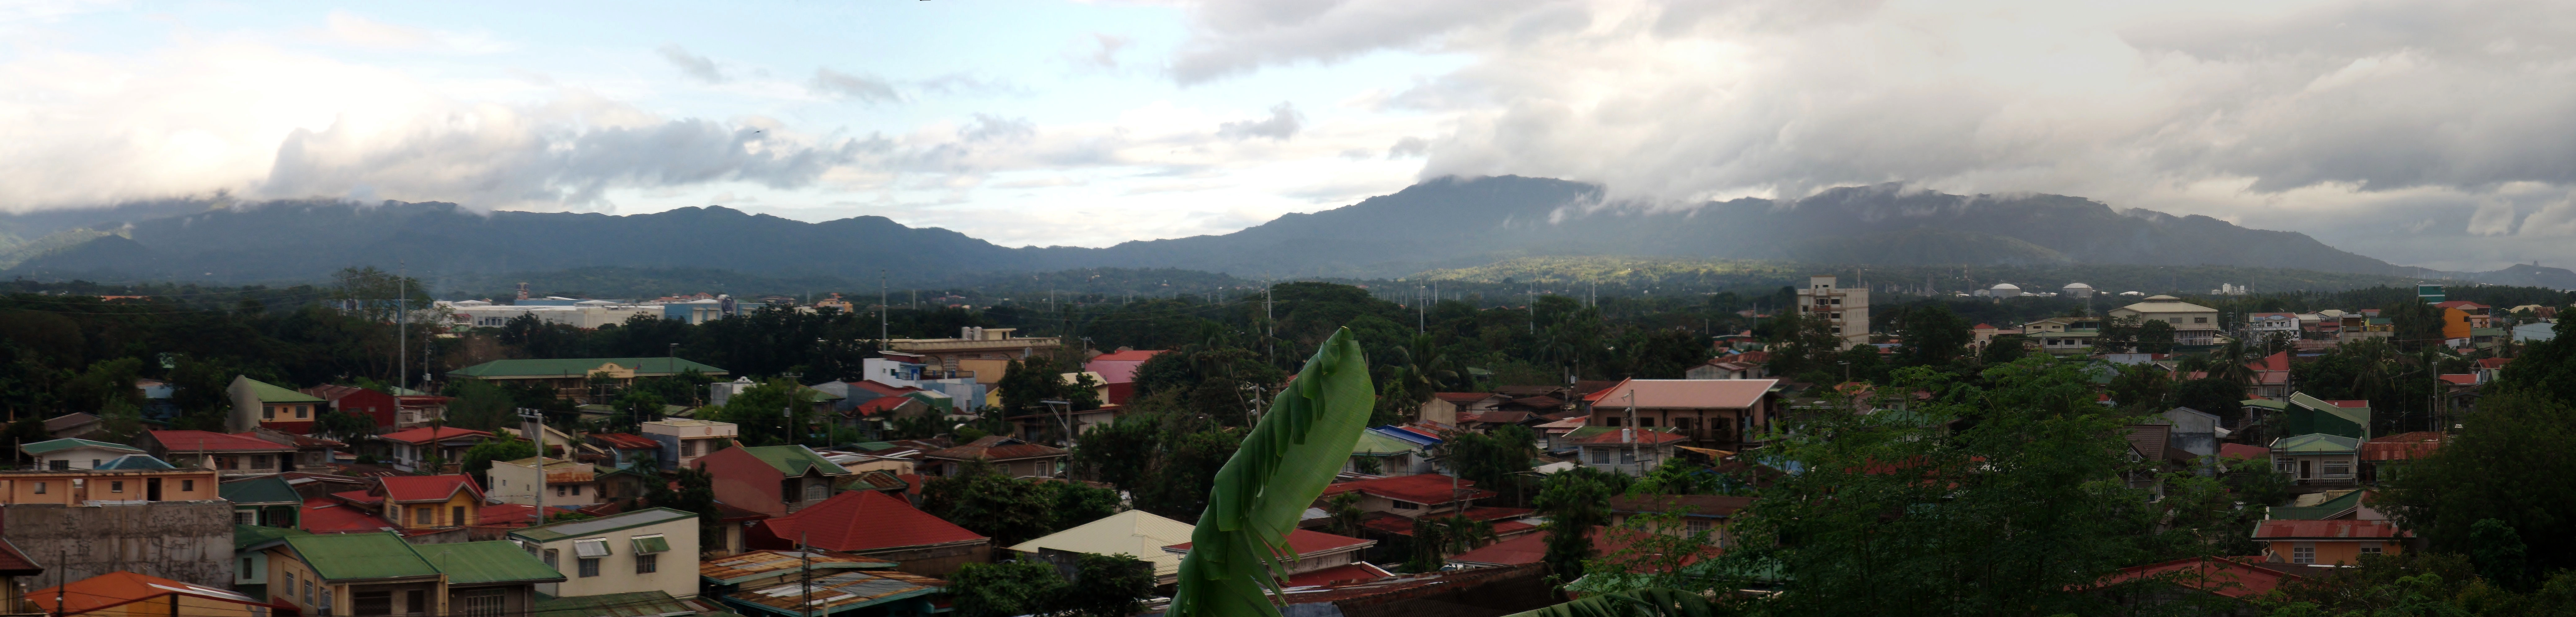 2014-12-25 Batangas City skyline 015.jpg